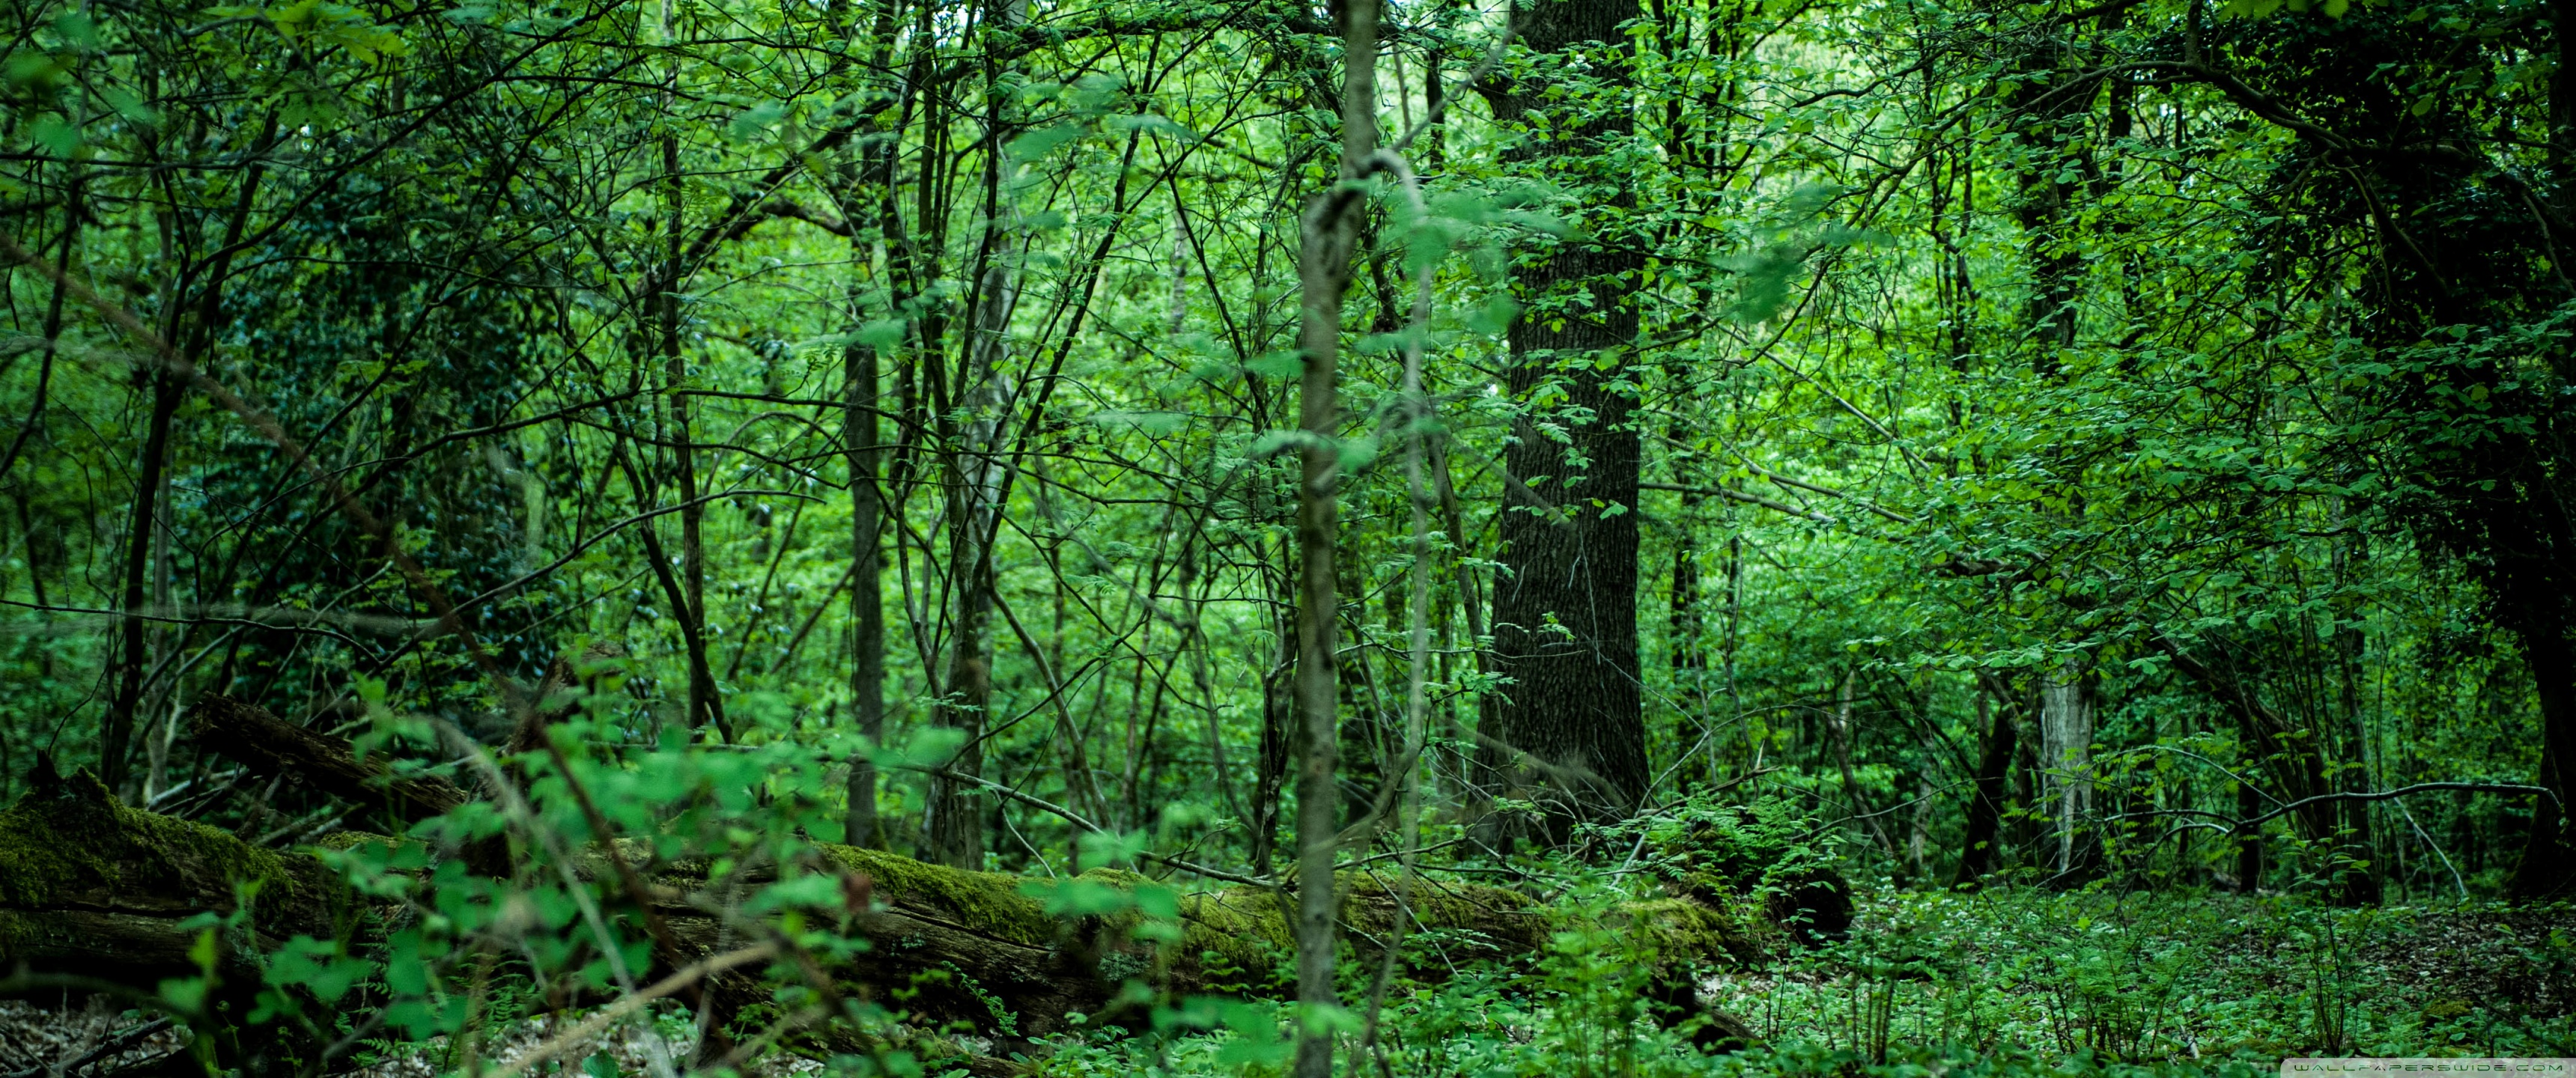 The Green Forest Ultra HD Desktop Background Wallpaper For